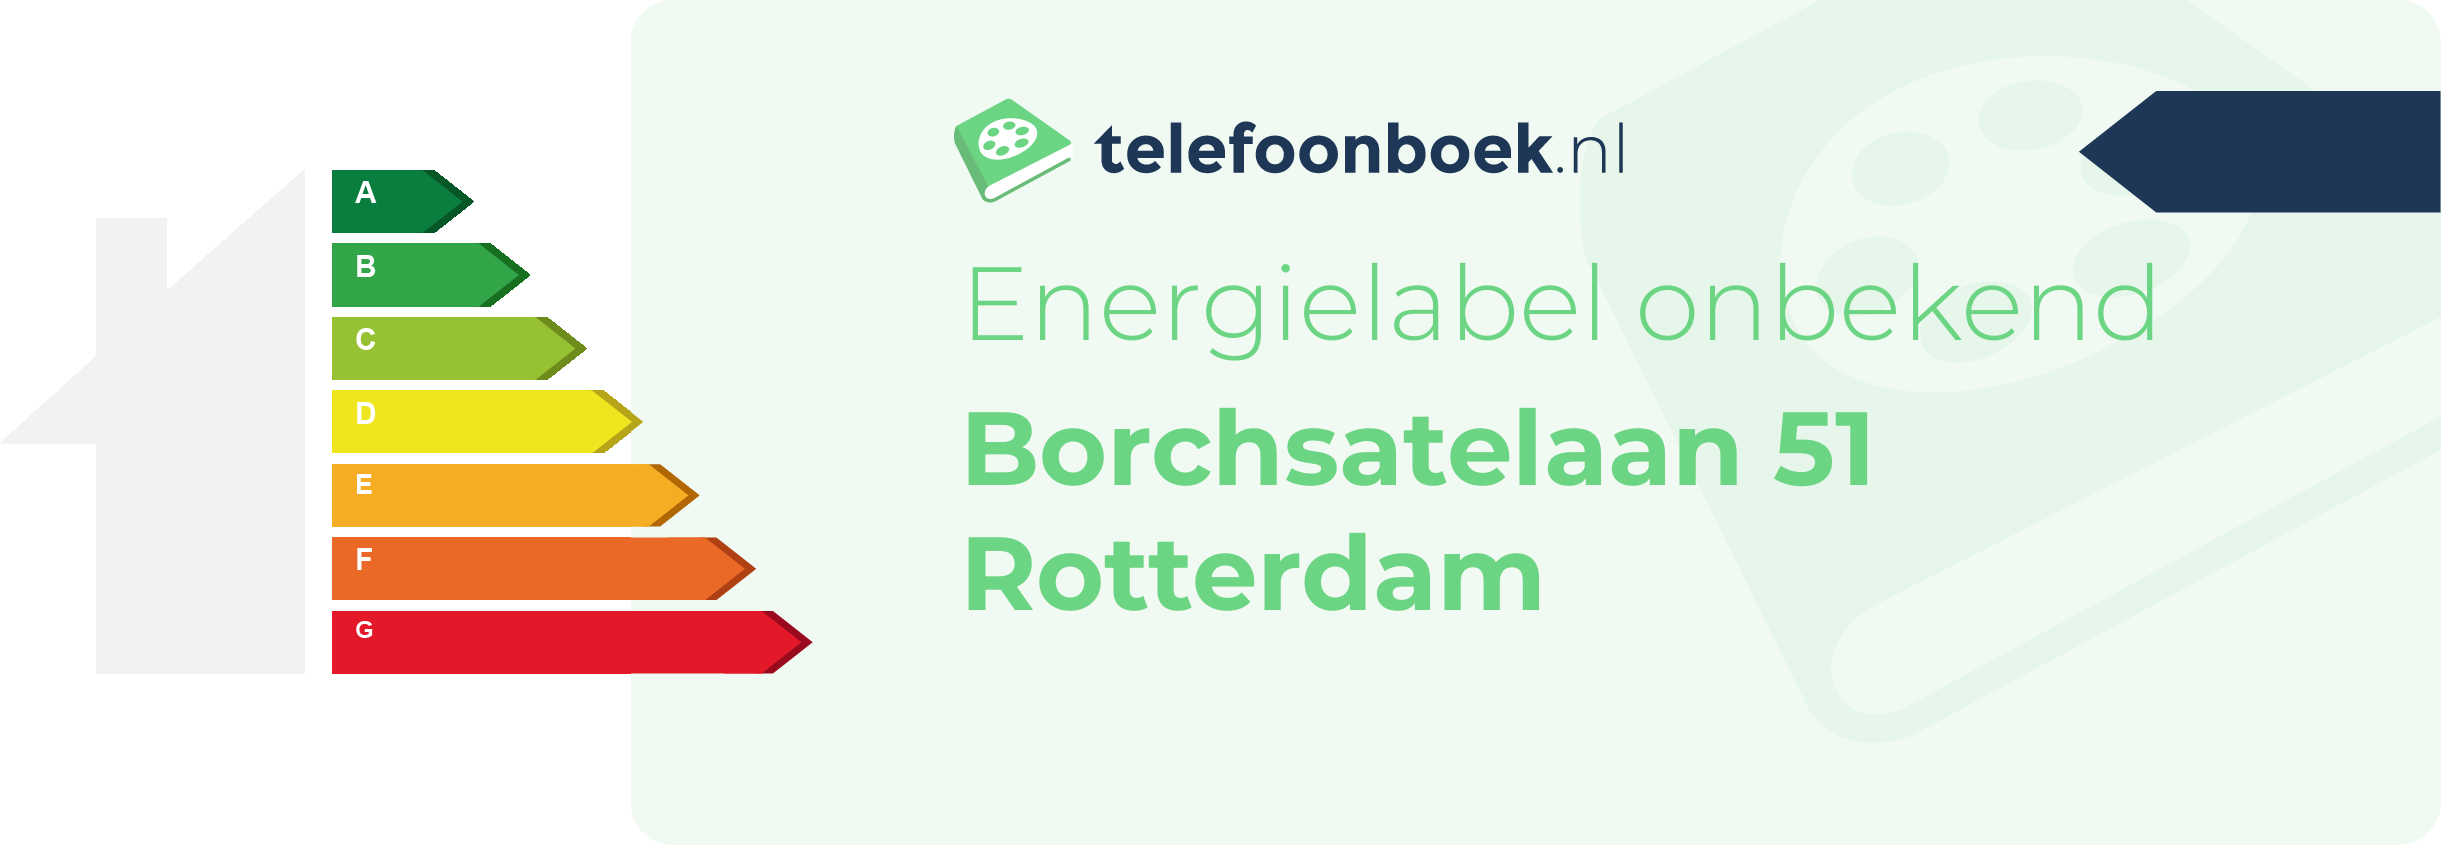 Energielabel Borchsatelaan 51 Rotterdam